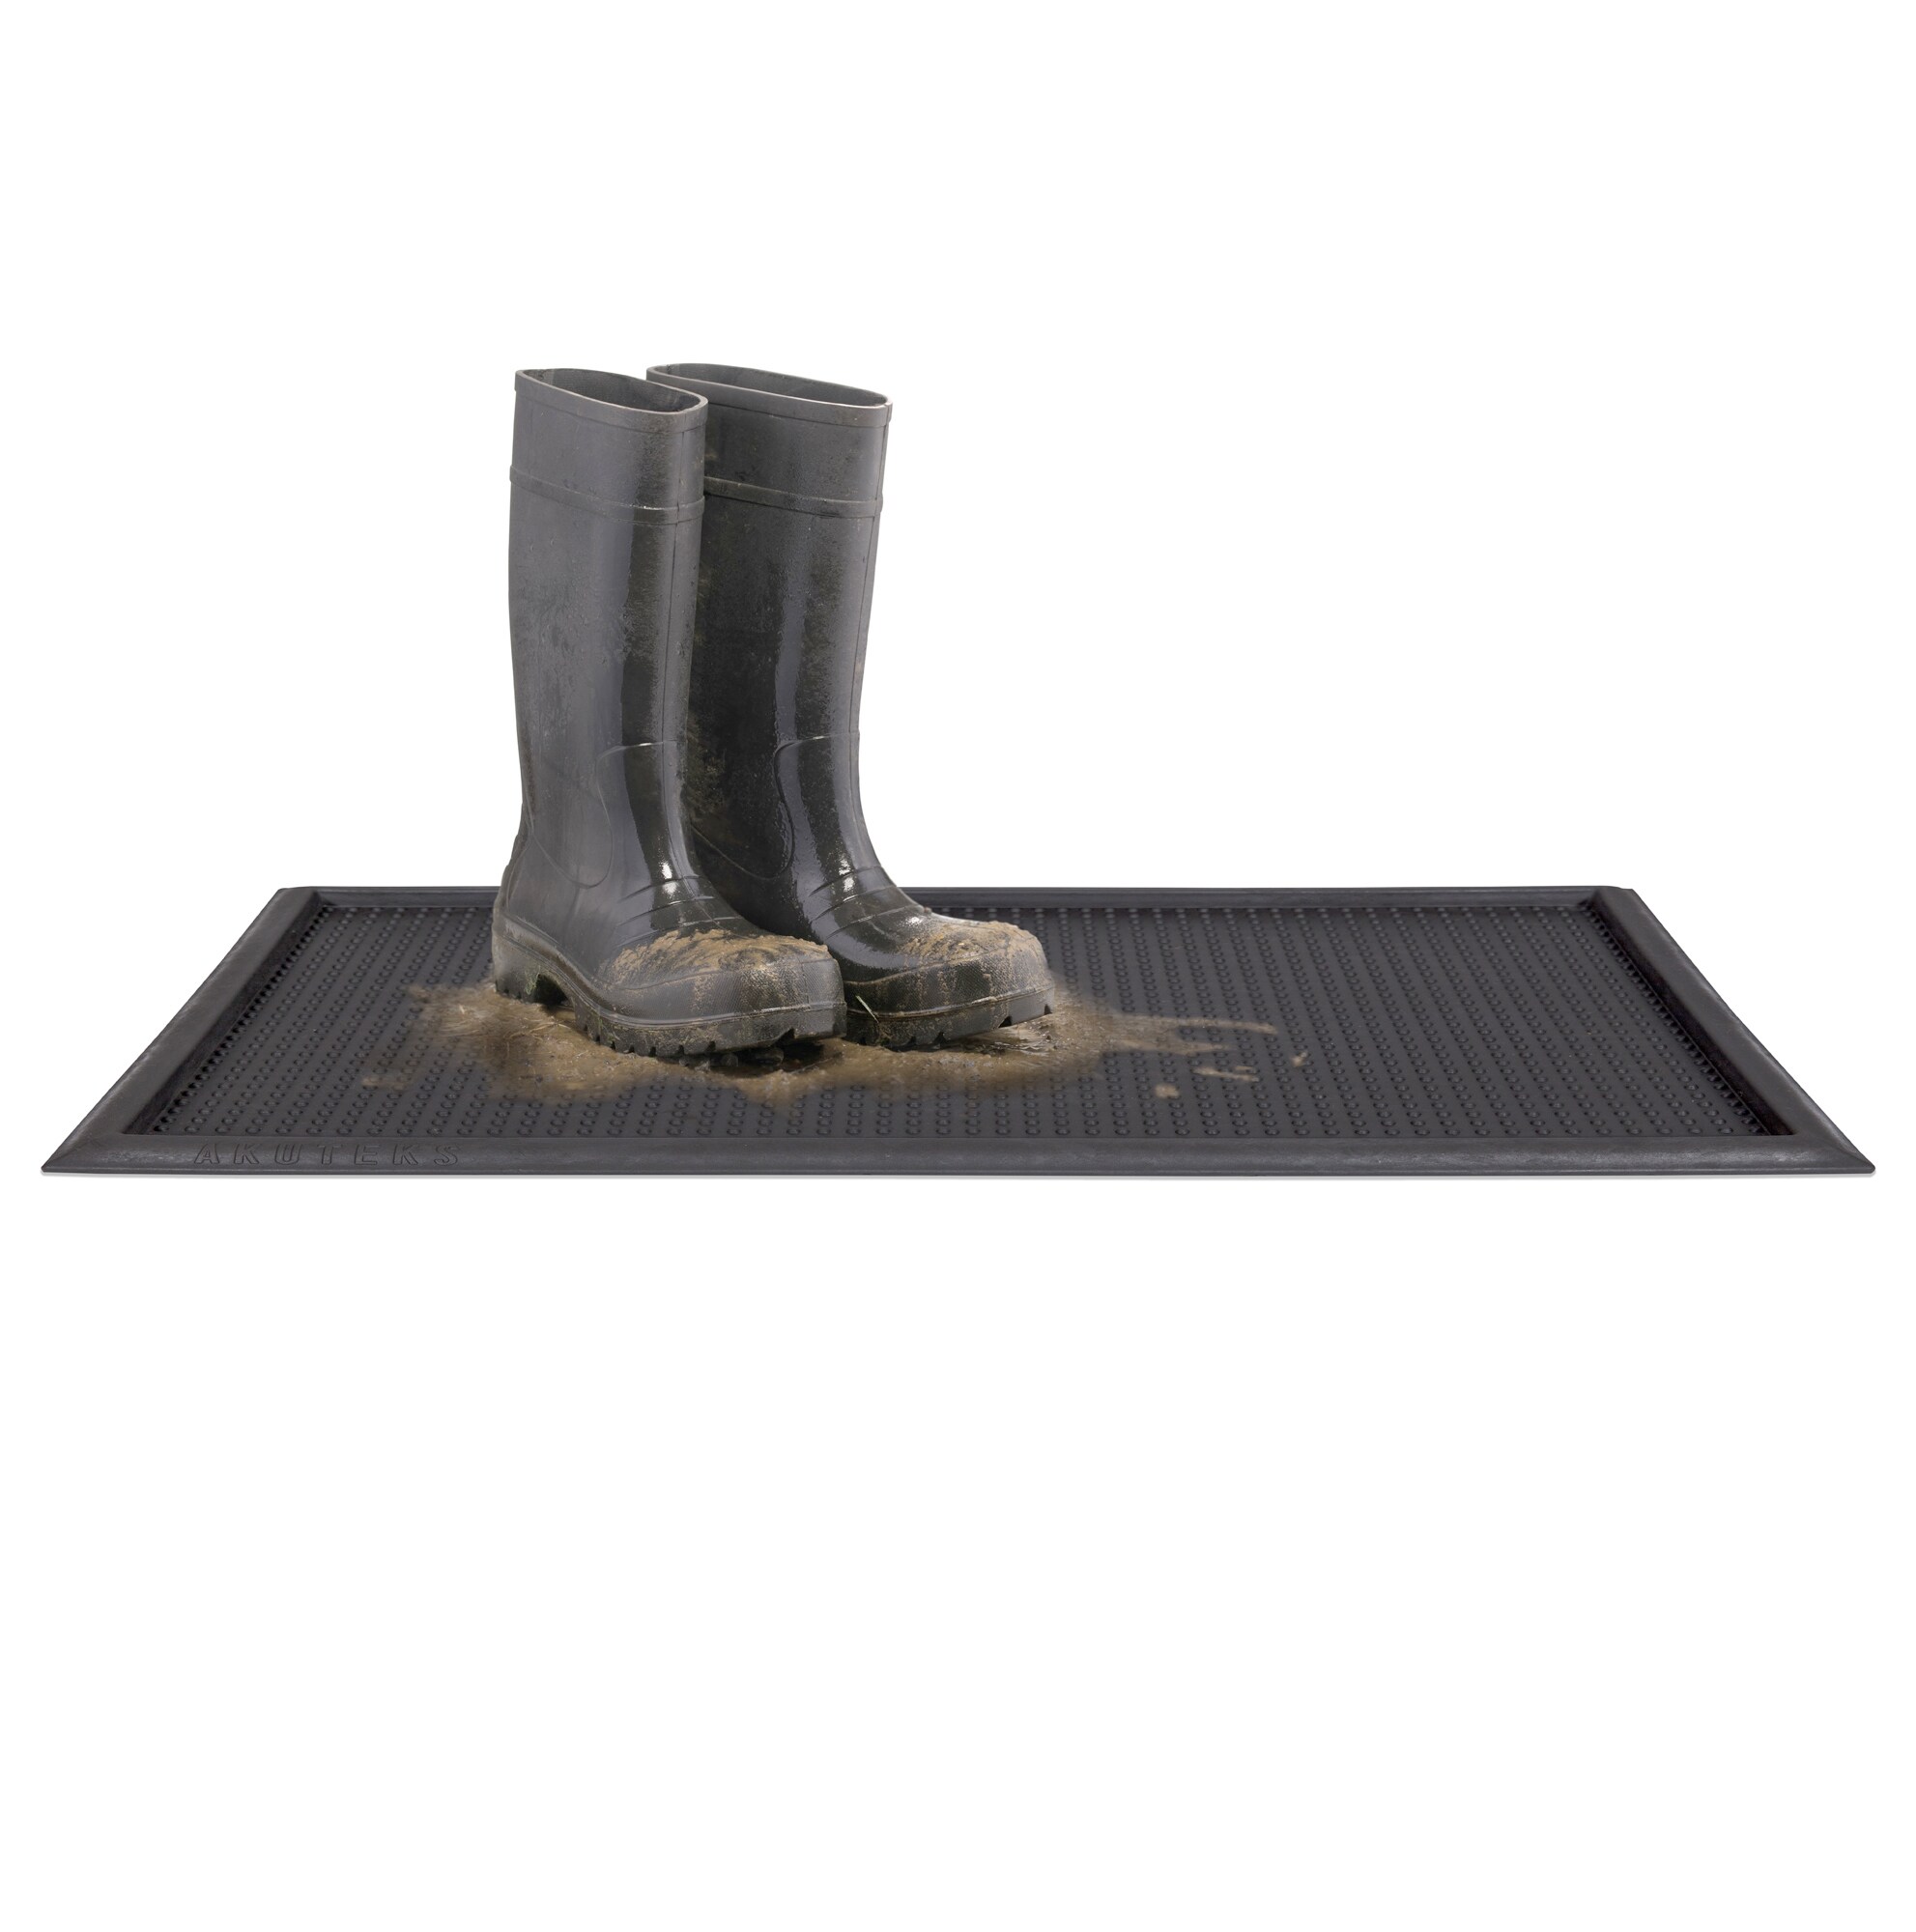 Ottomanson 2-ft x 3-ft Black Rectangular Indoor or Outdoor Boot